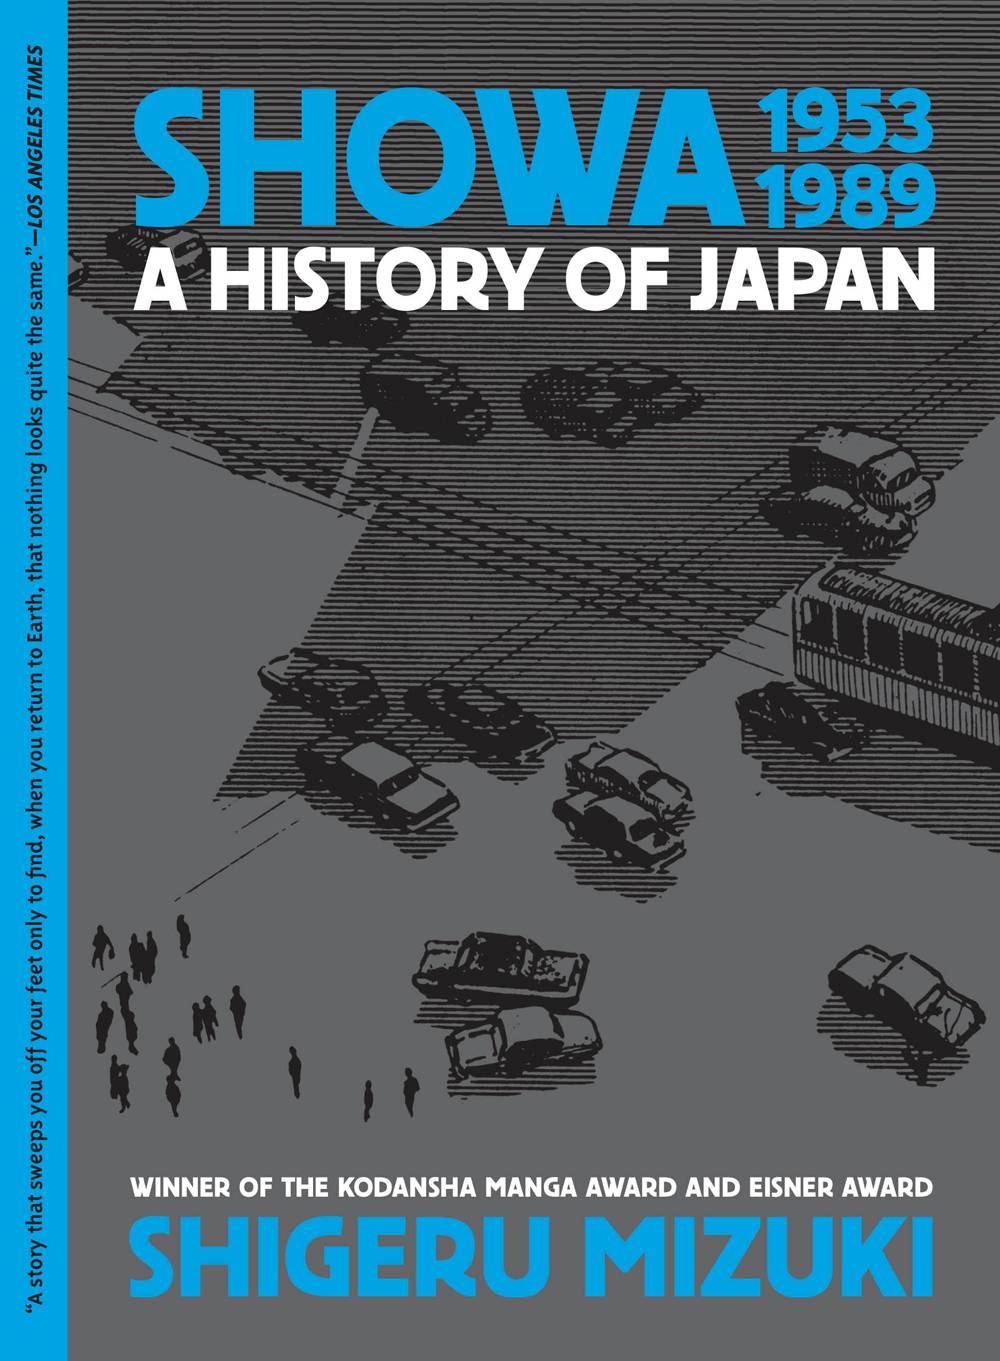 SHOWA HISTORY OF JAPAN GN VOL 04 1953-1989 SHIGERU MIZUKI (N